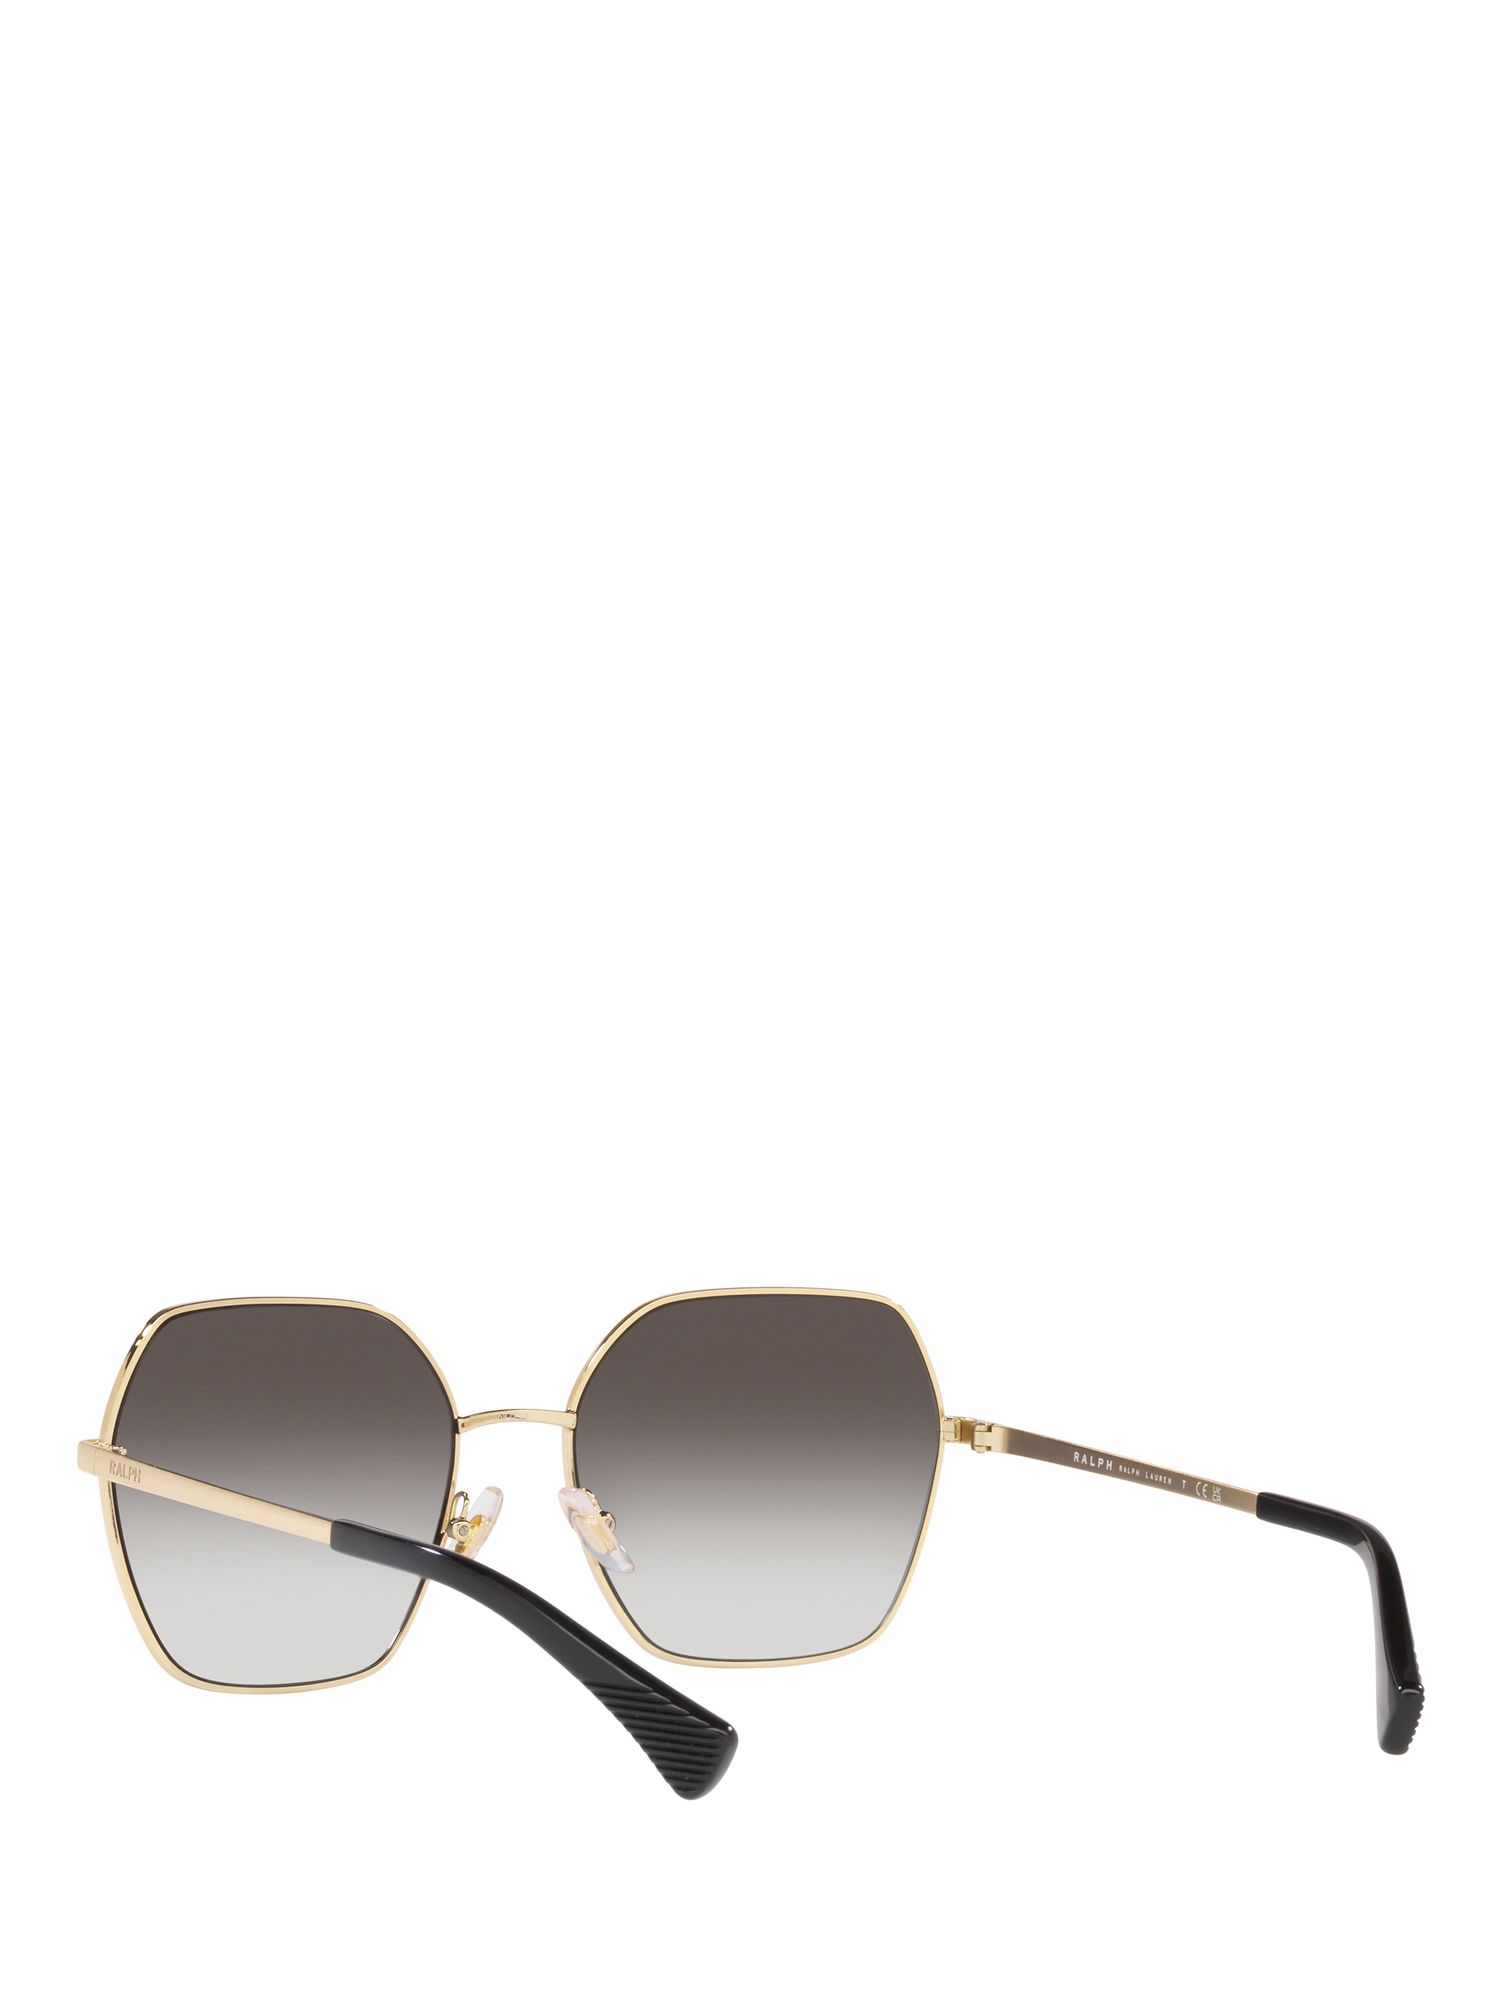 Ralph RA4138 Women's Square Sunglasses, Pale Gold/Grey Gradient at John ...